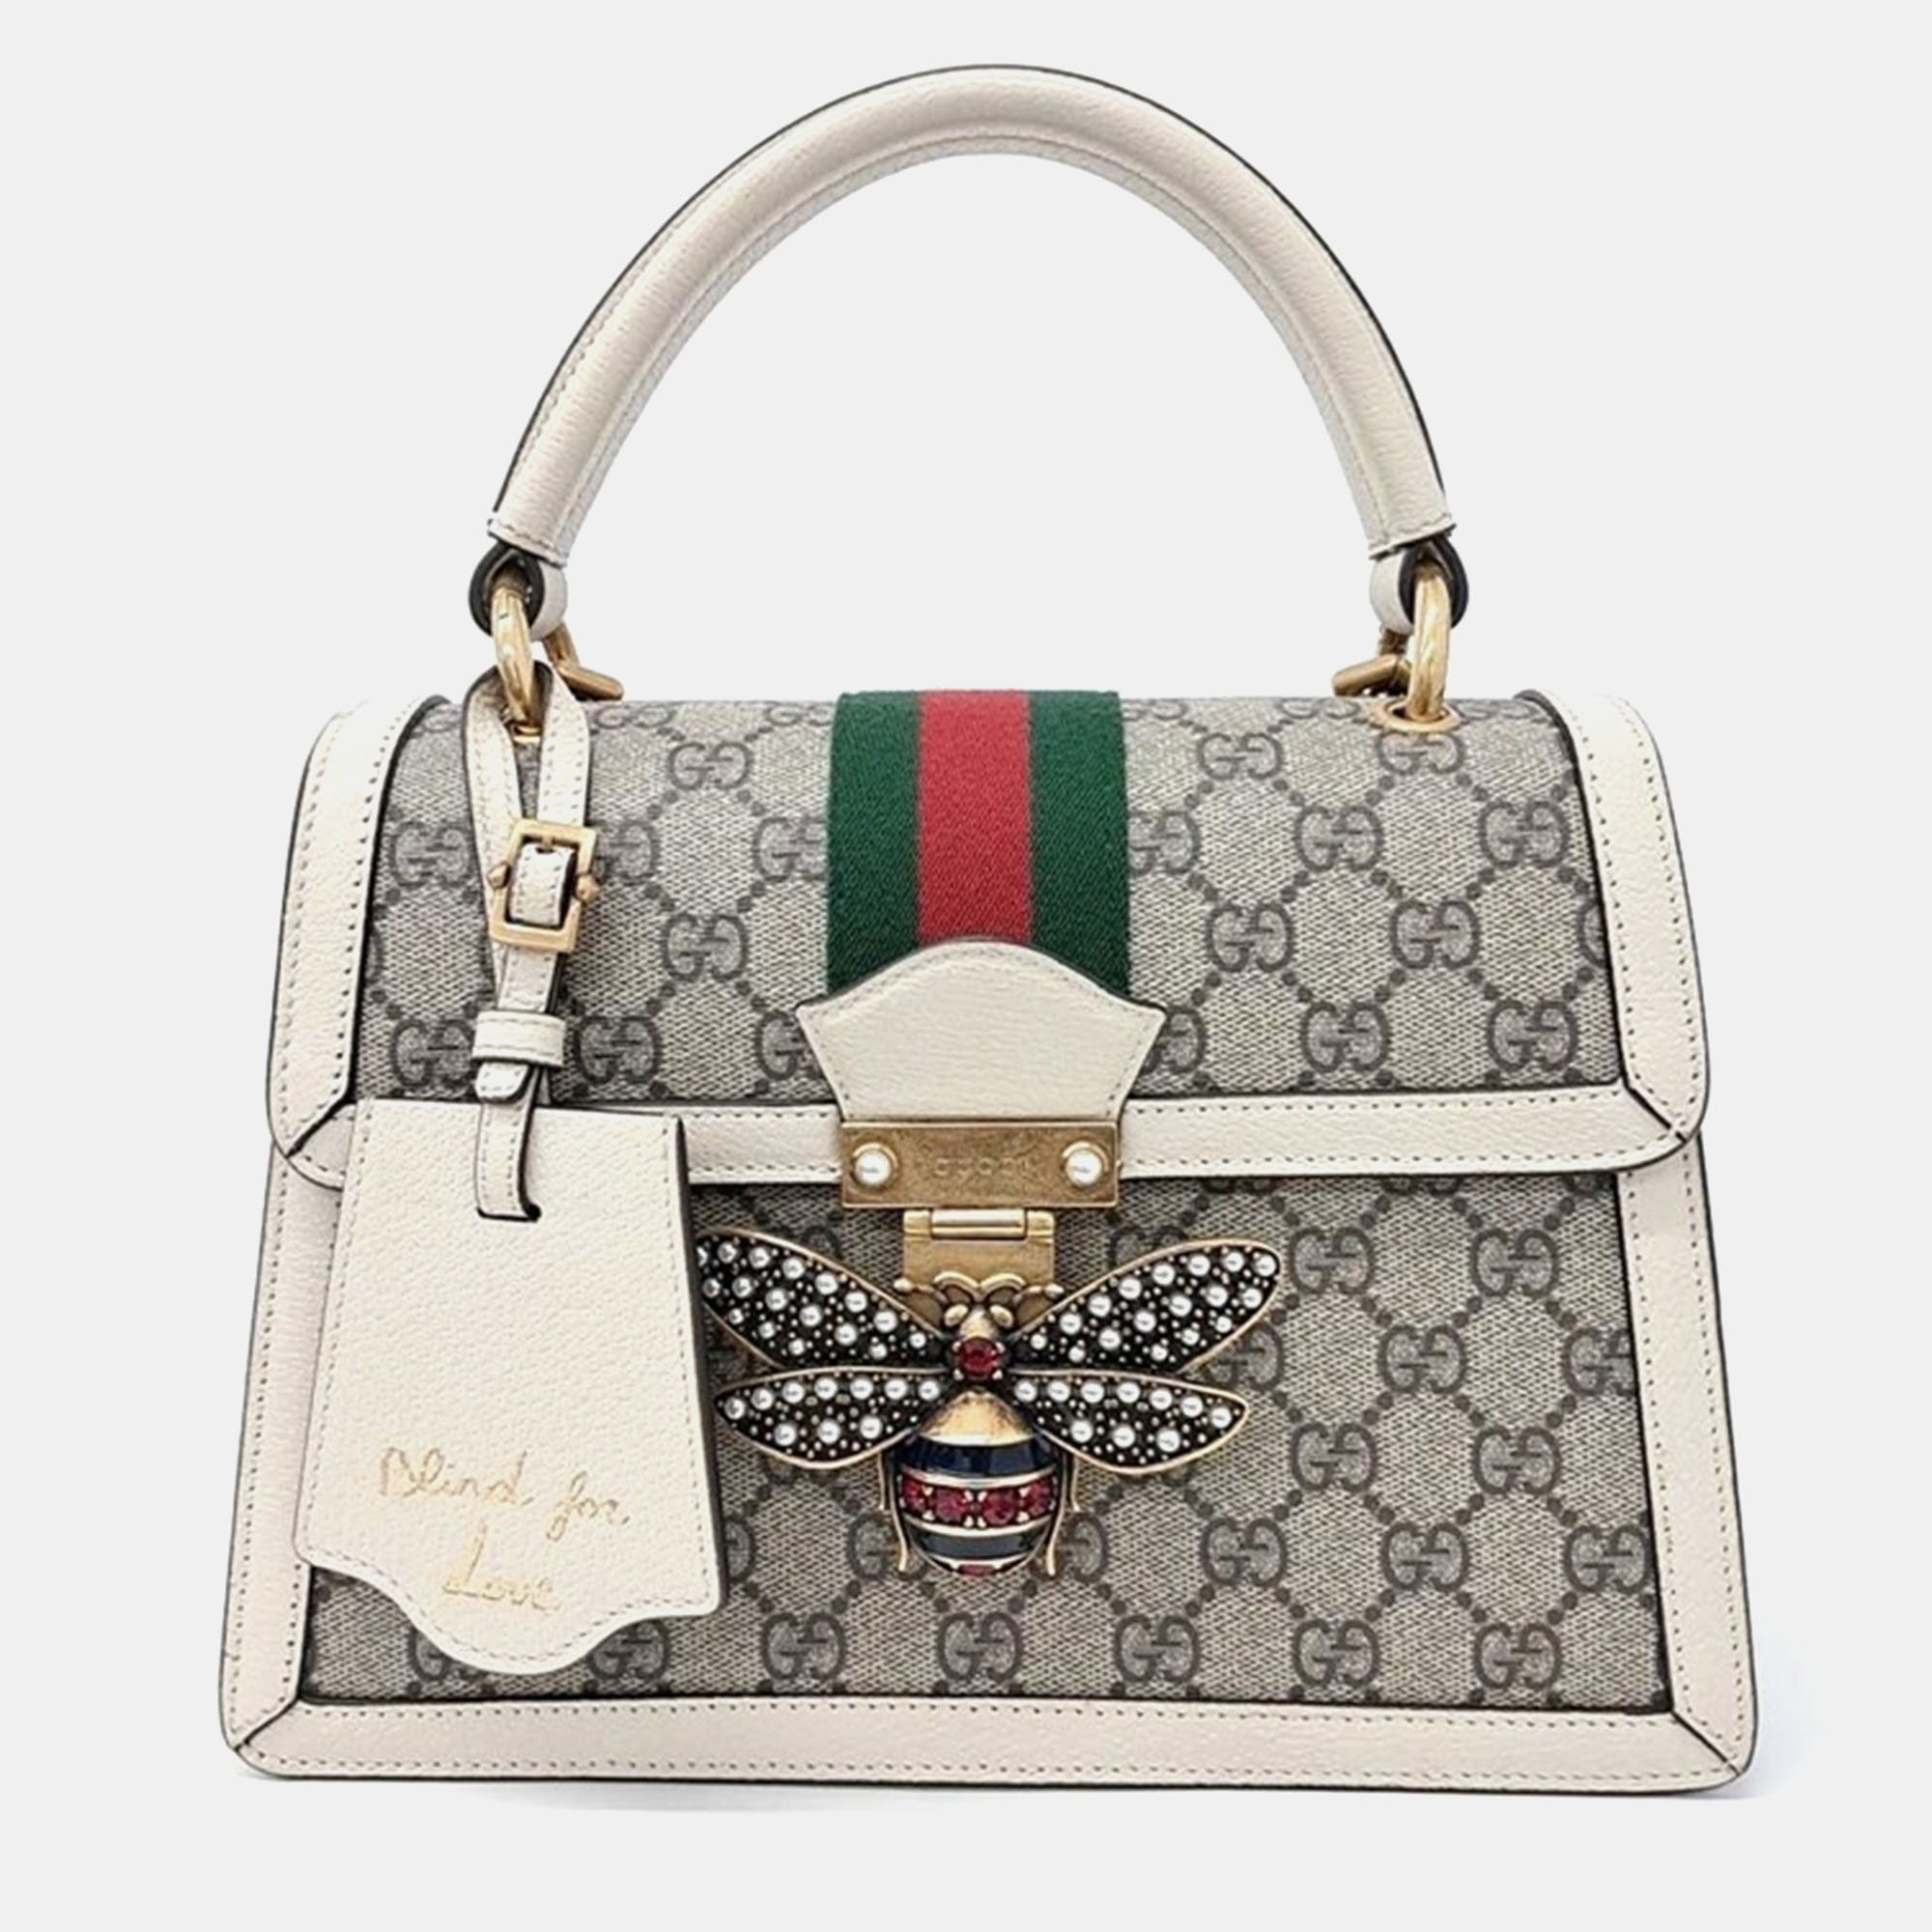 Gucci queen margaret top handle tote & shoulder bag